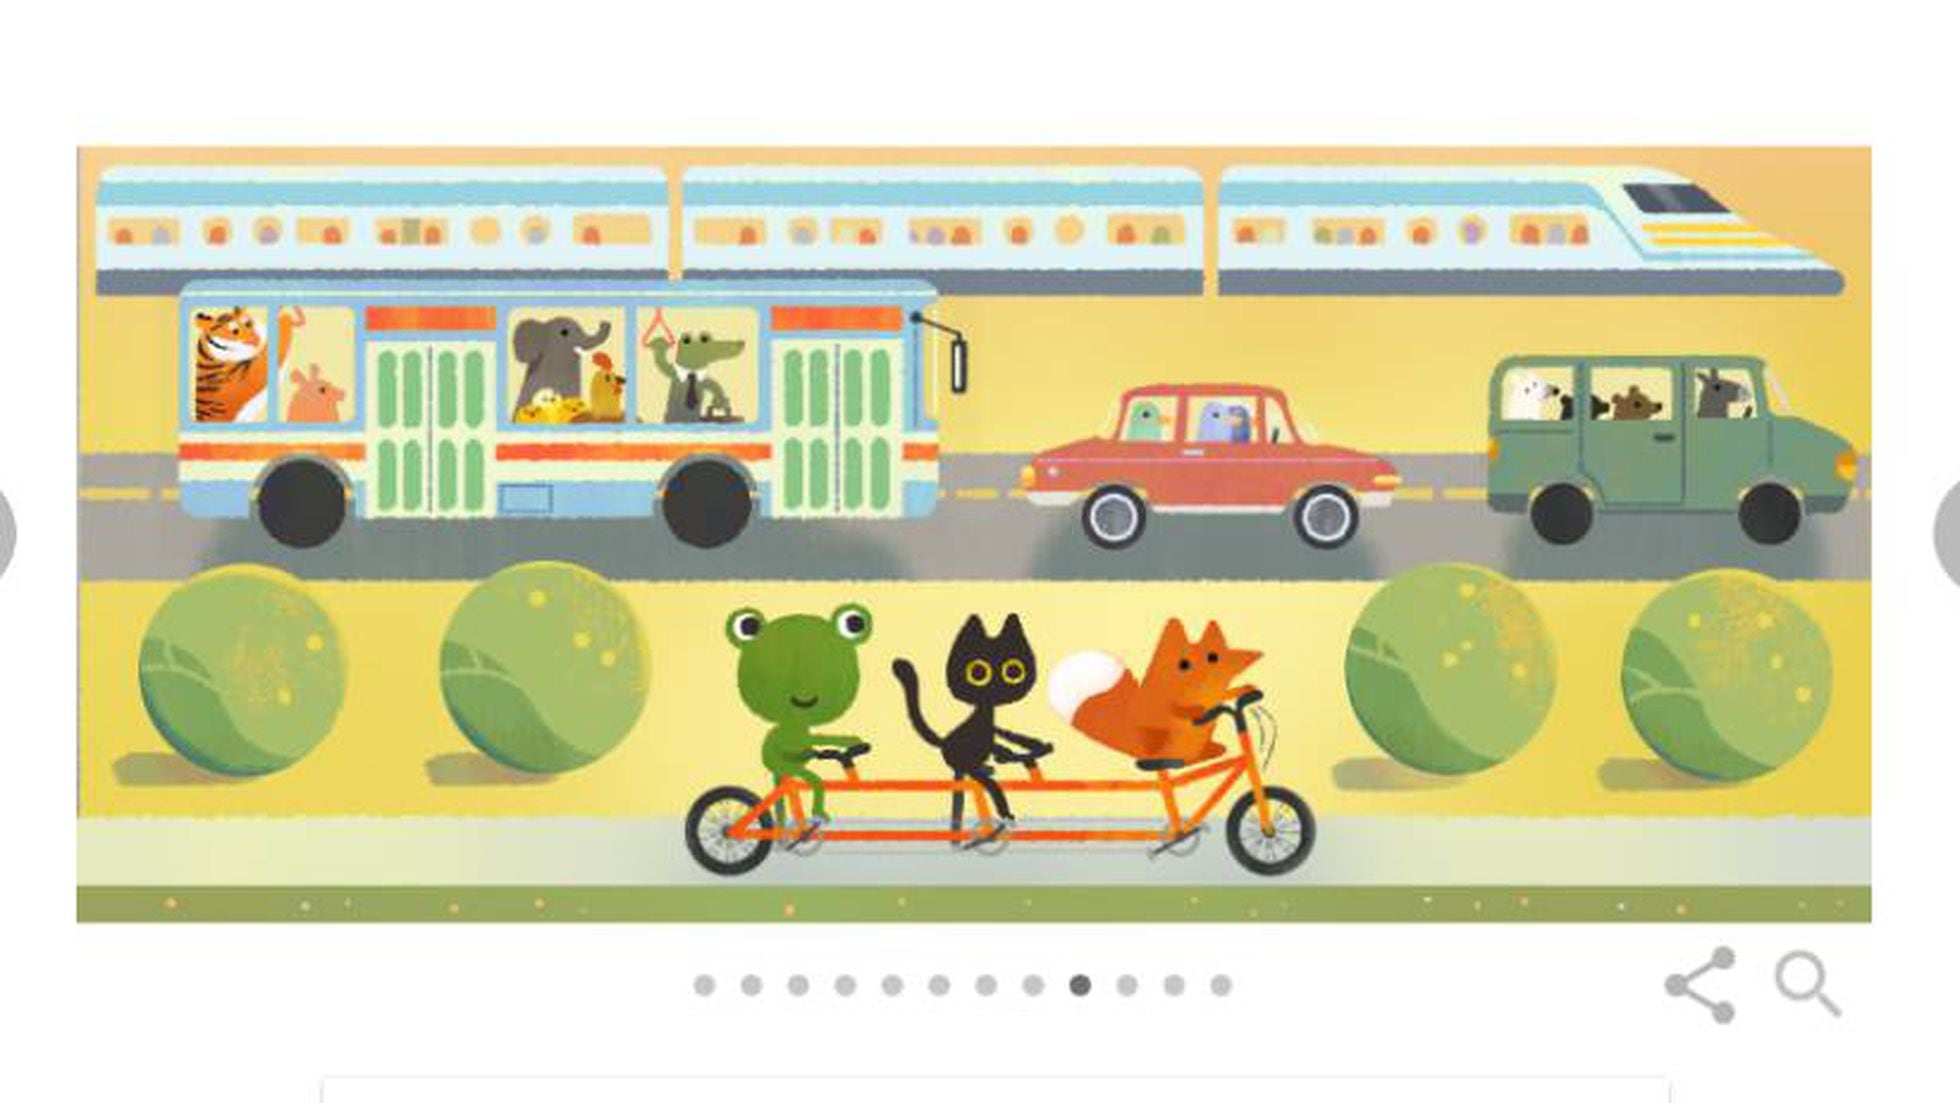 Dia da Terra: Google cria divertido doodle para descobrir que